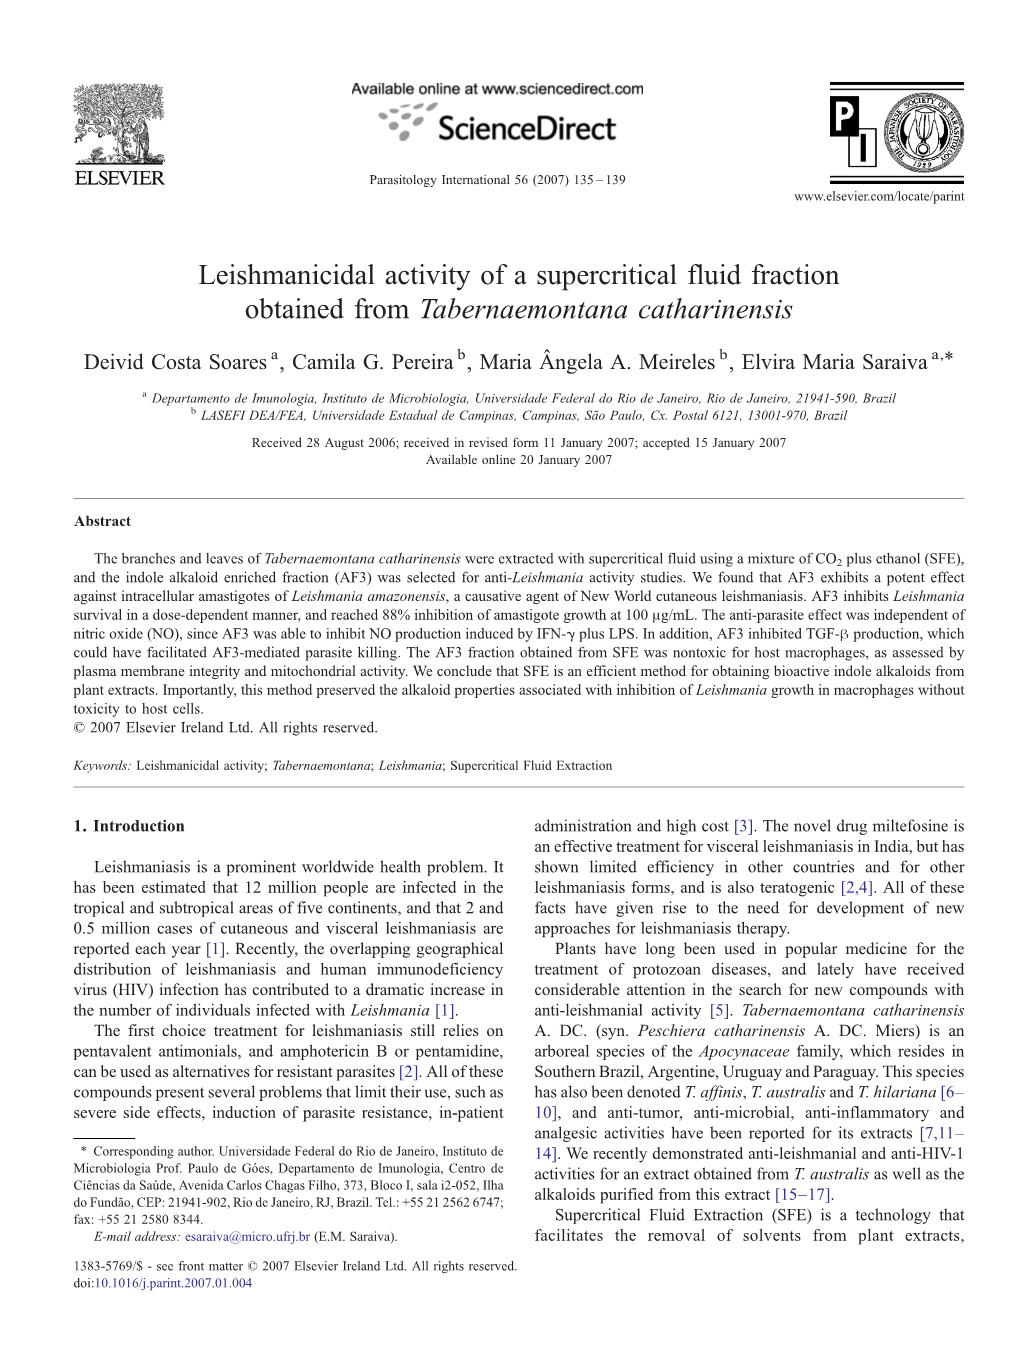 Leishmanicidal Activity of a Supercritical Fluid Fraction Obtained from Tabernaemontana Catharinensis ⁎ Deivid Costa Soares A, Camila G